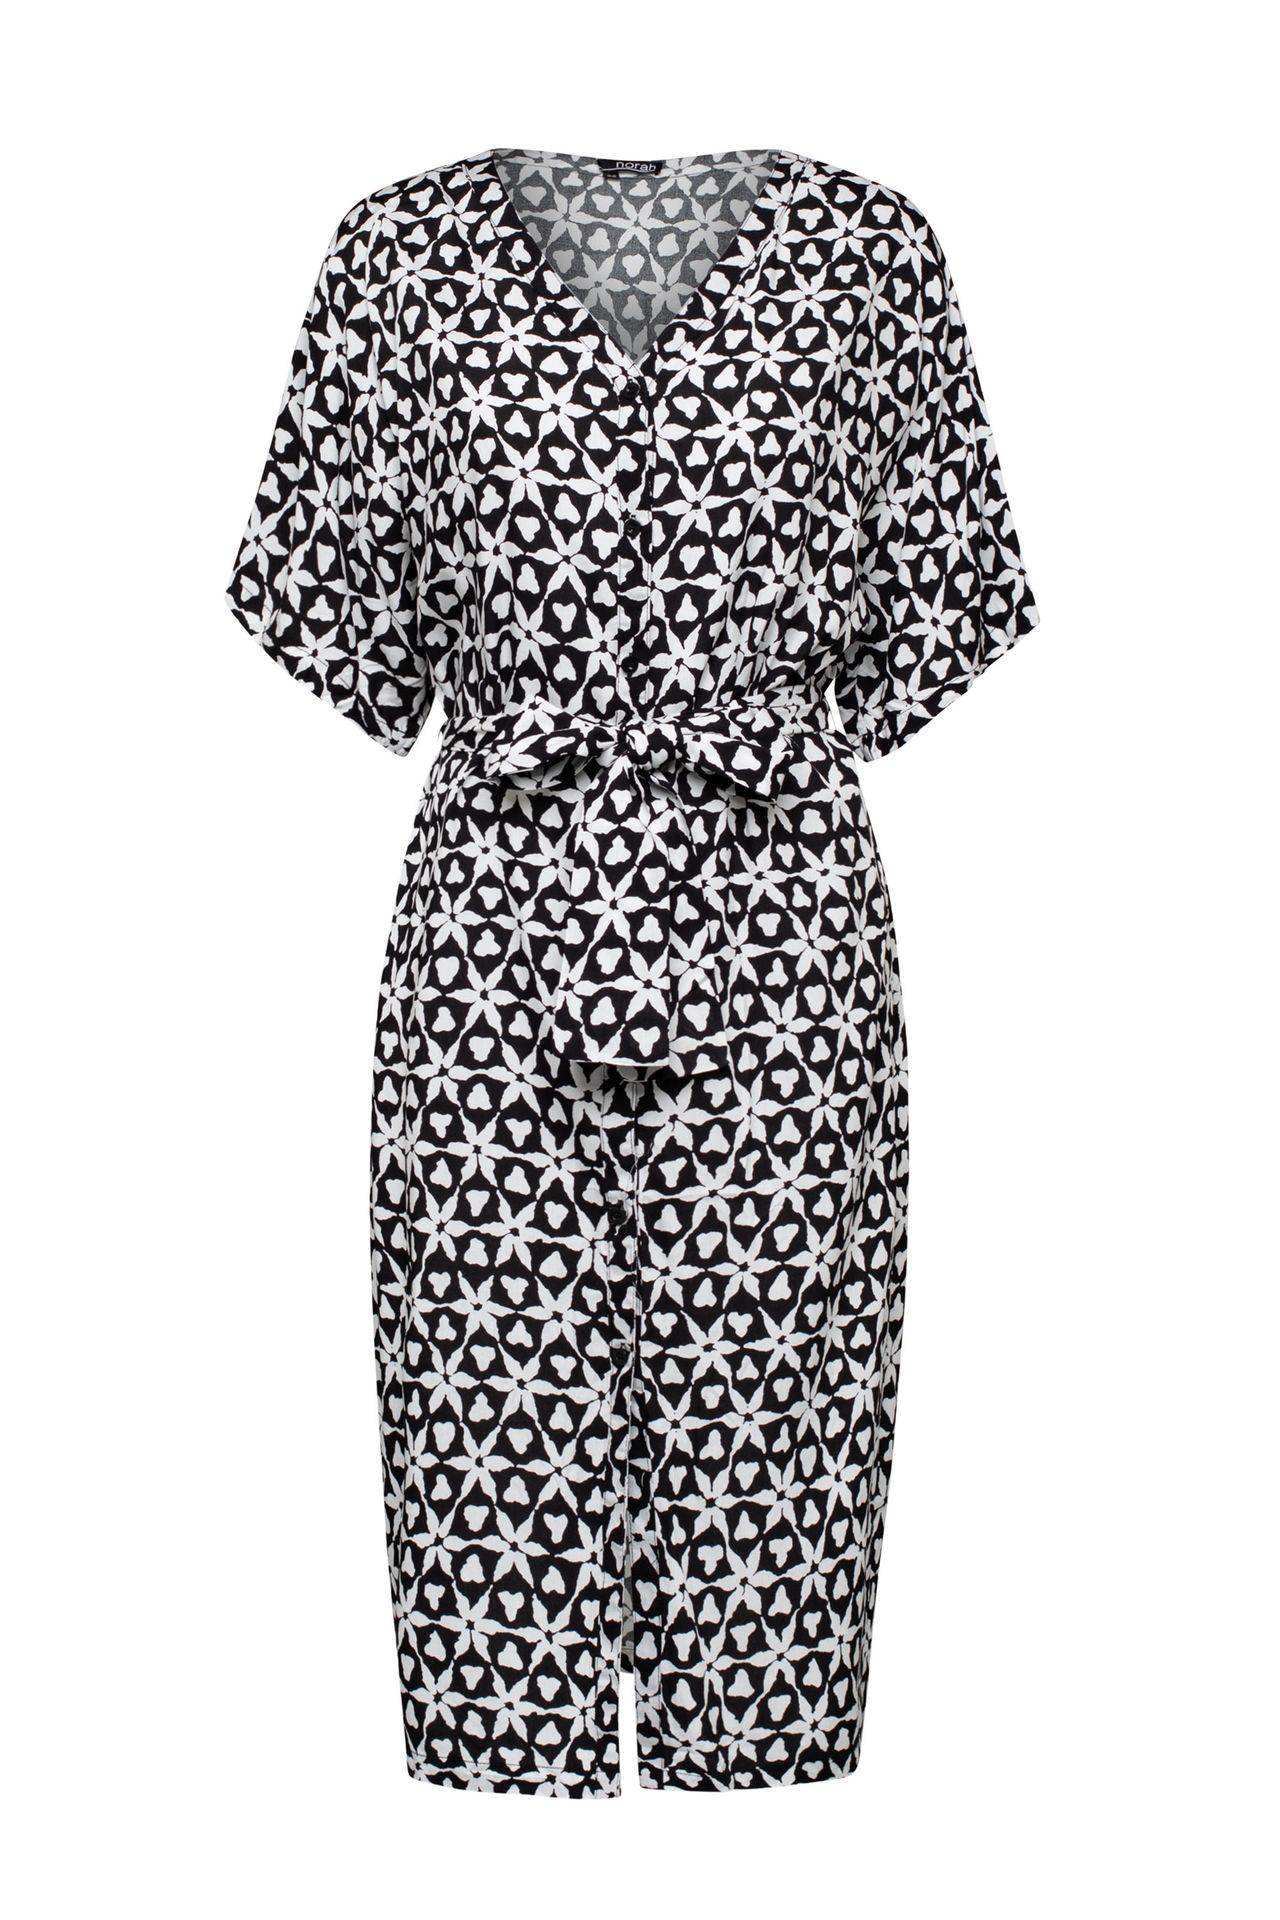 Norah Mini jurk meerkleurig black/white 212668-031